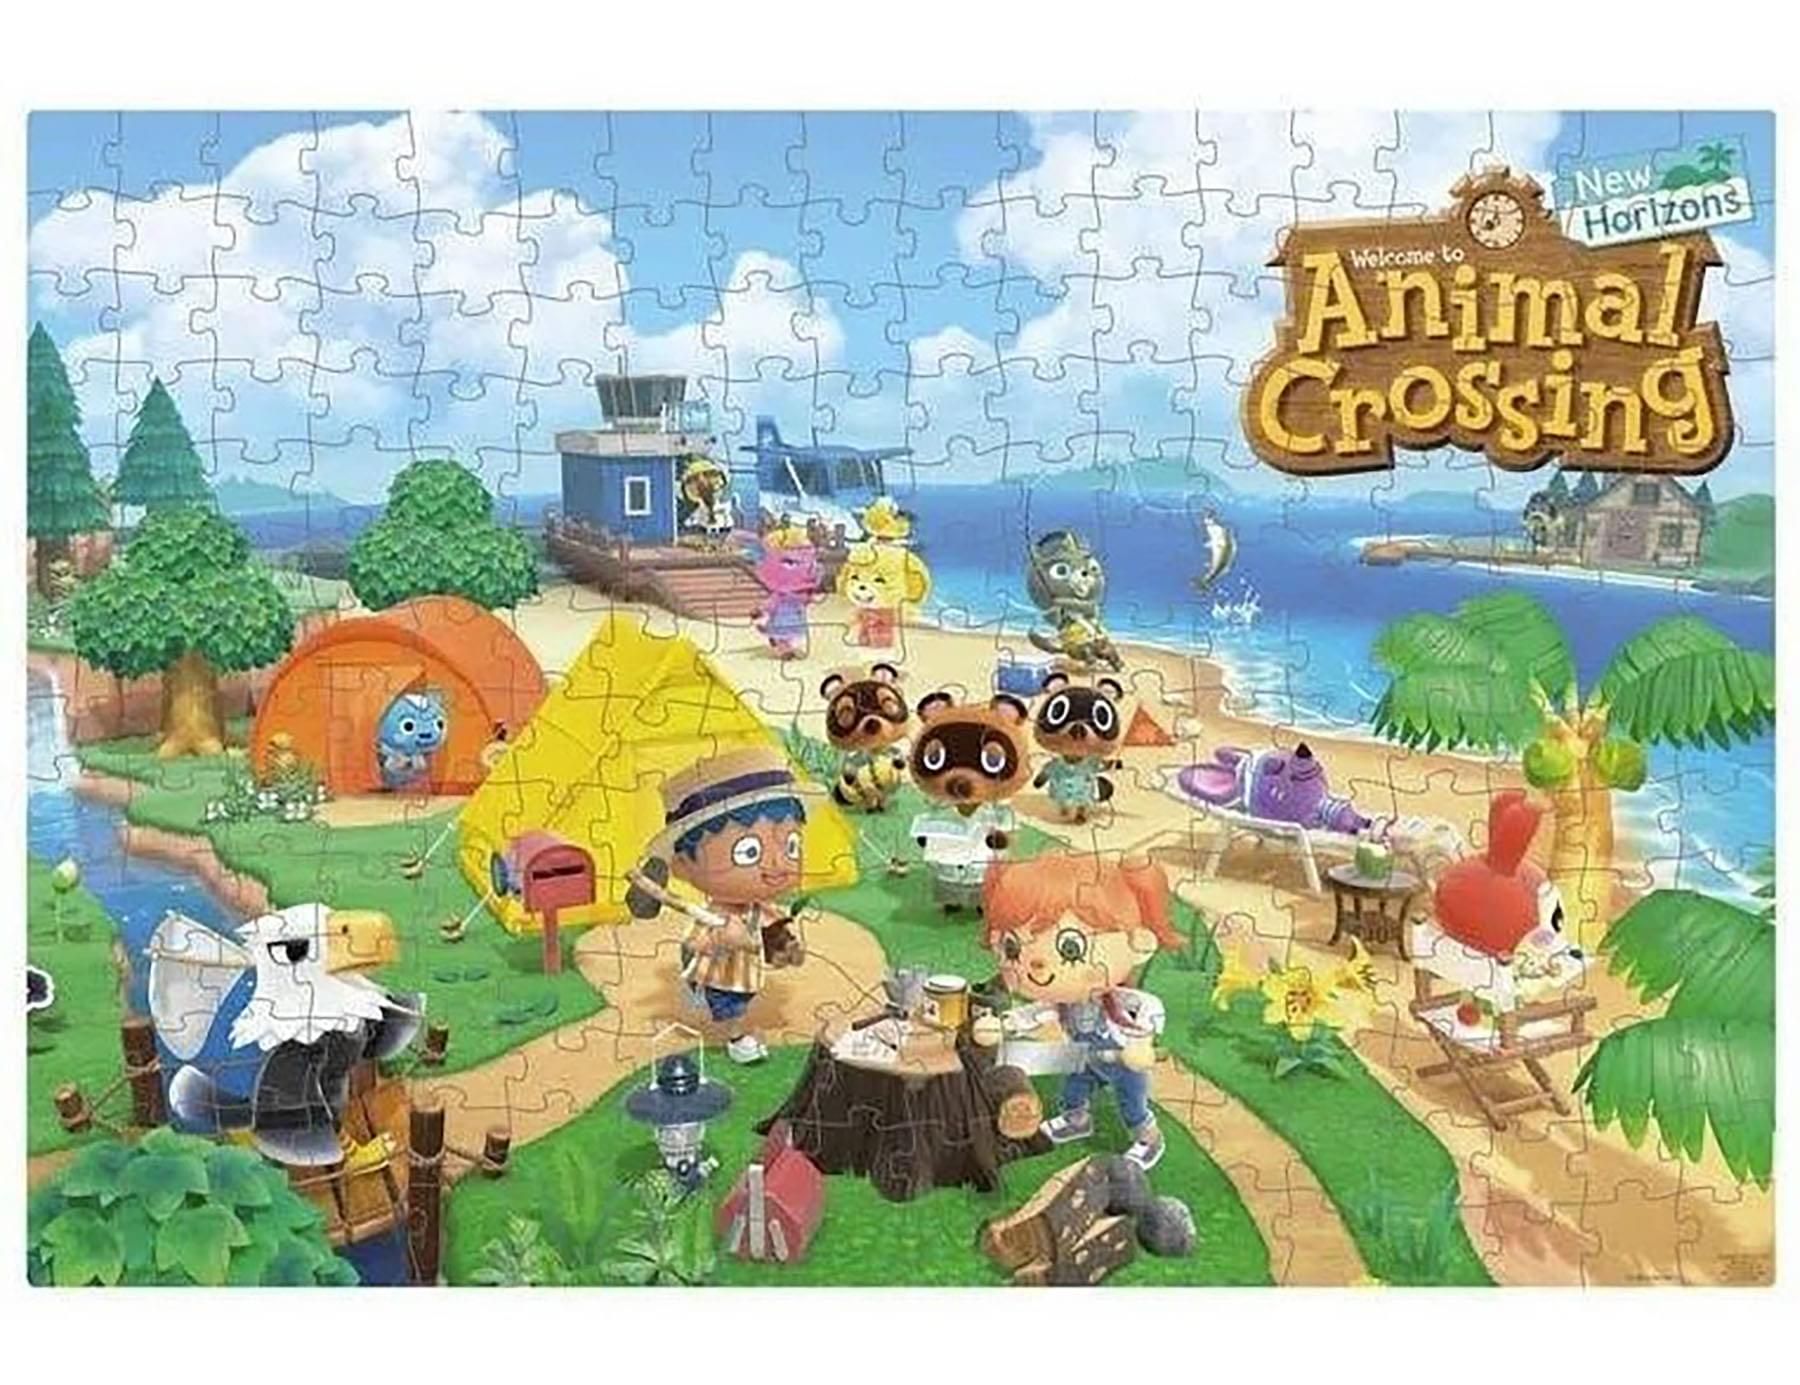 Animal Crossing 250 Piece Jigsaw Puzzle